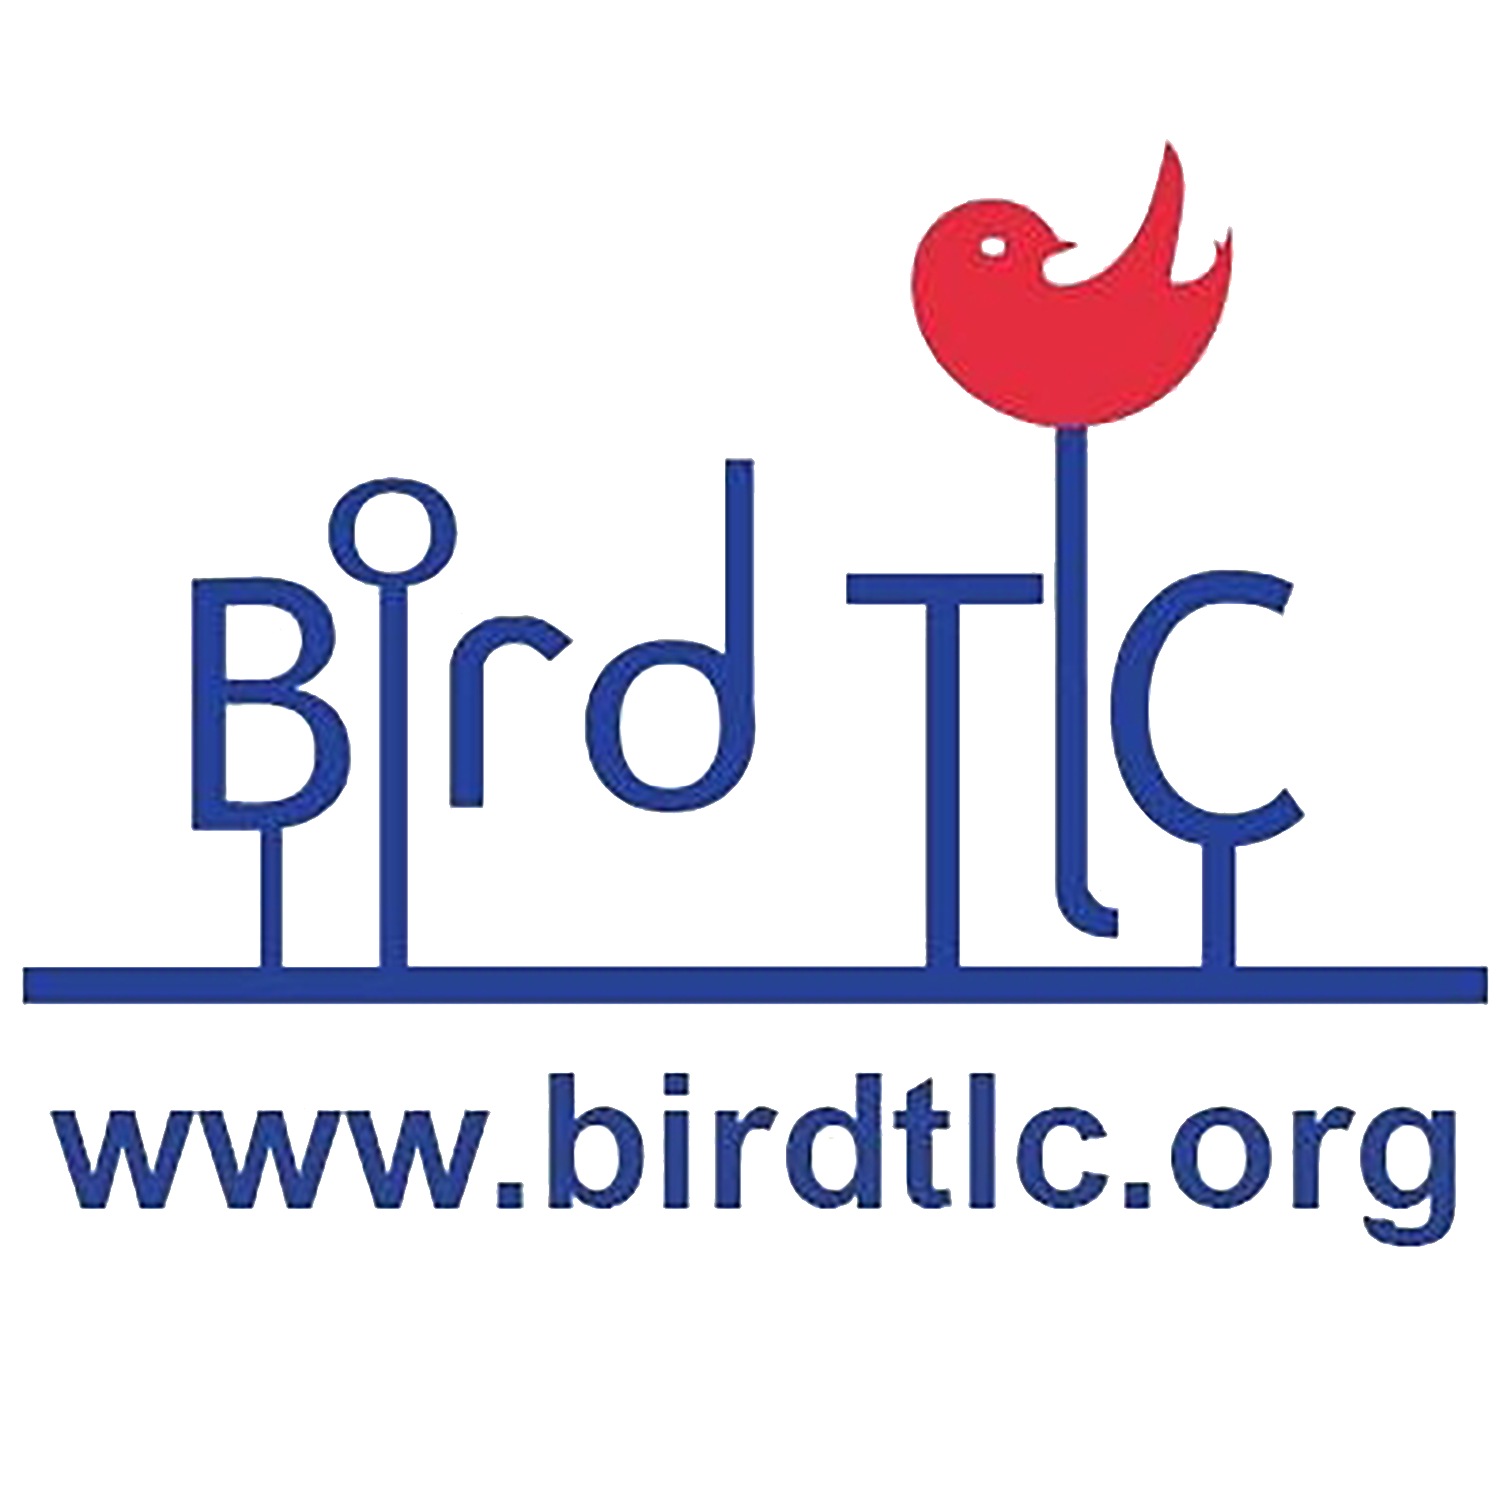 Bird TLC Logo_02-14-2021 Transparent background.png